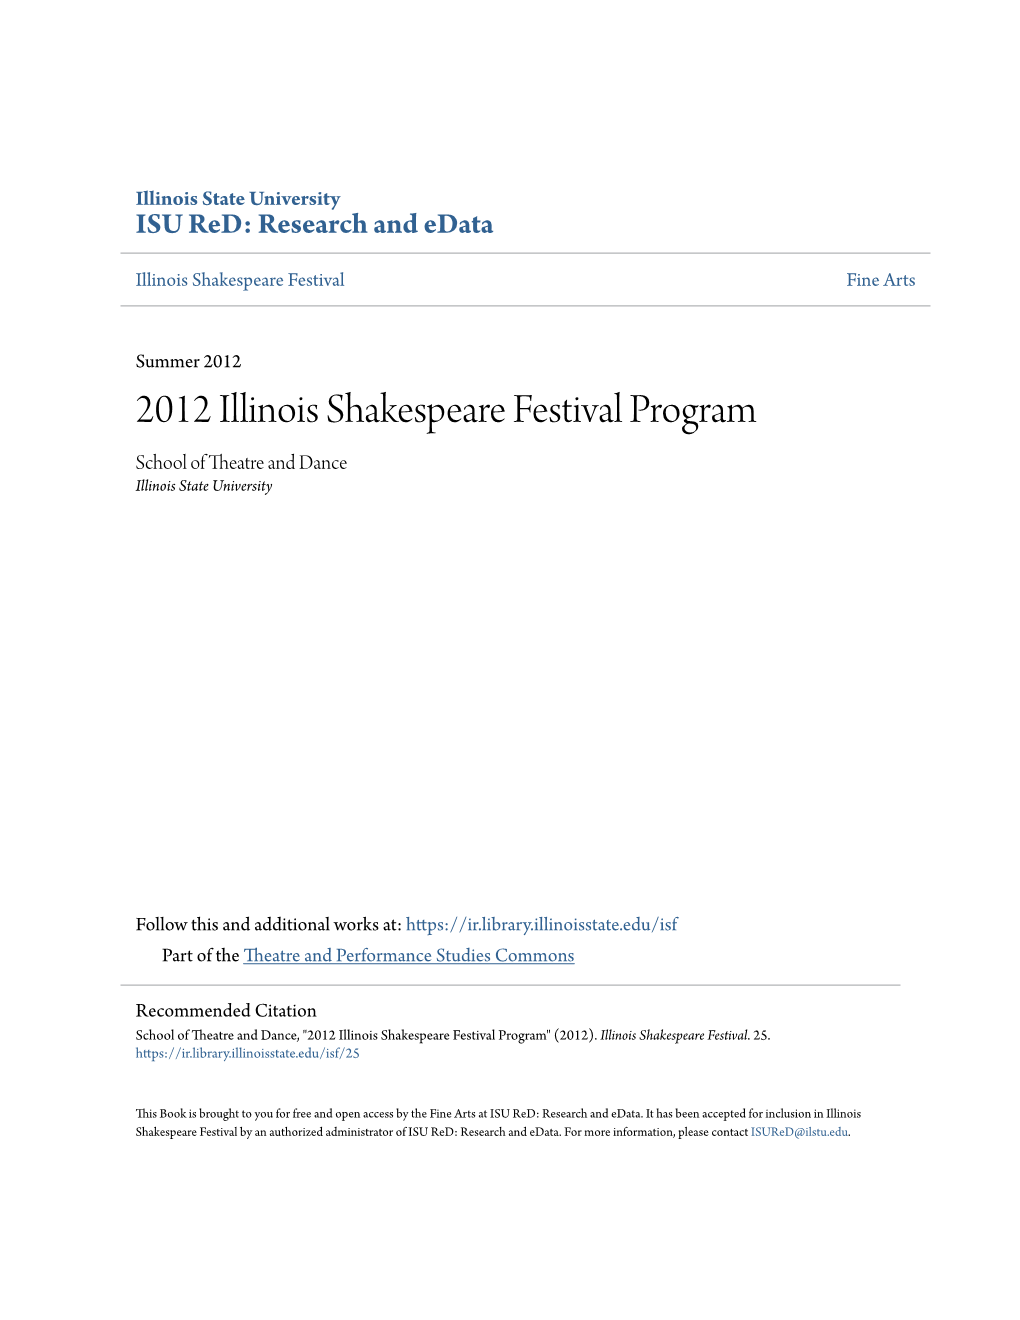 2012 Illinois Shakespeare Festival Program School of Theatre and Dance Illinois State University